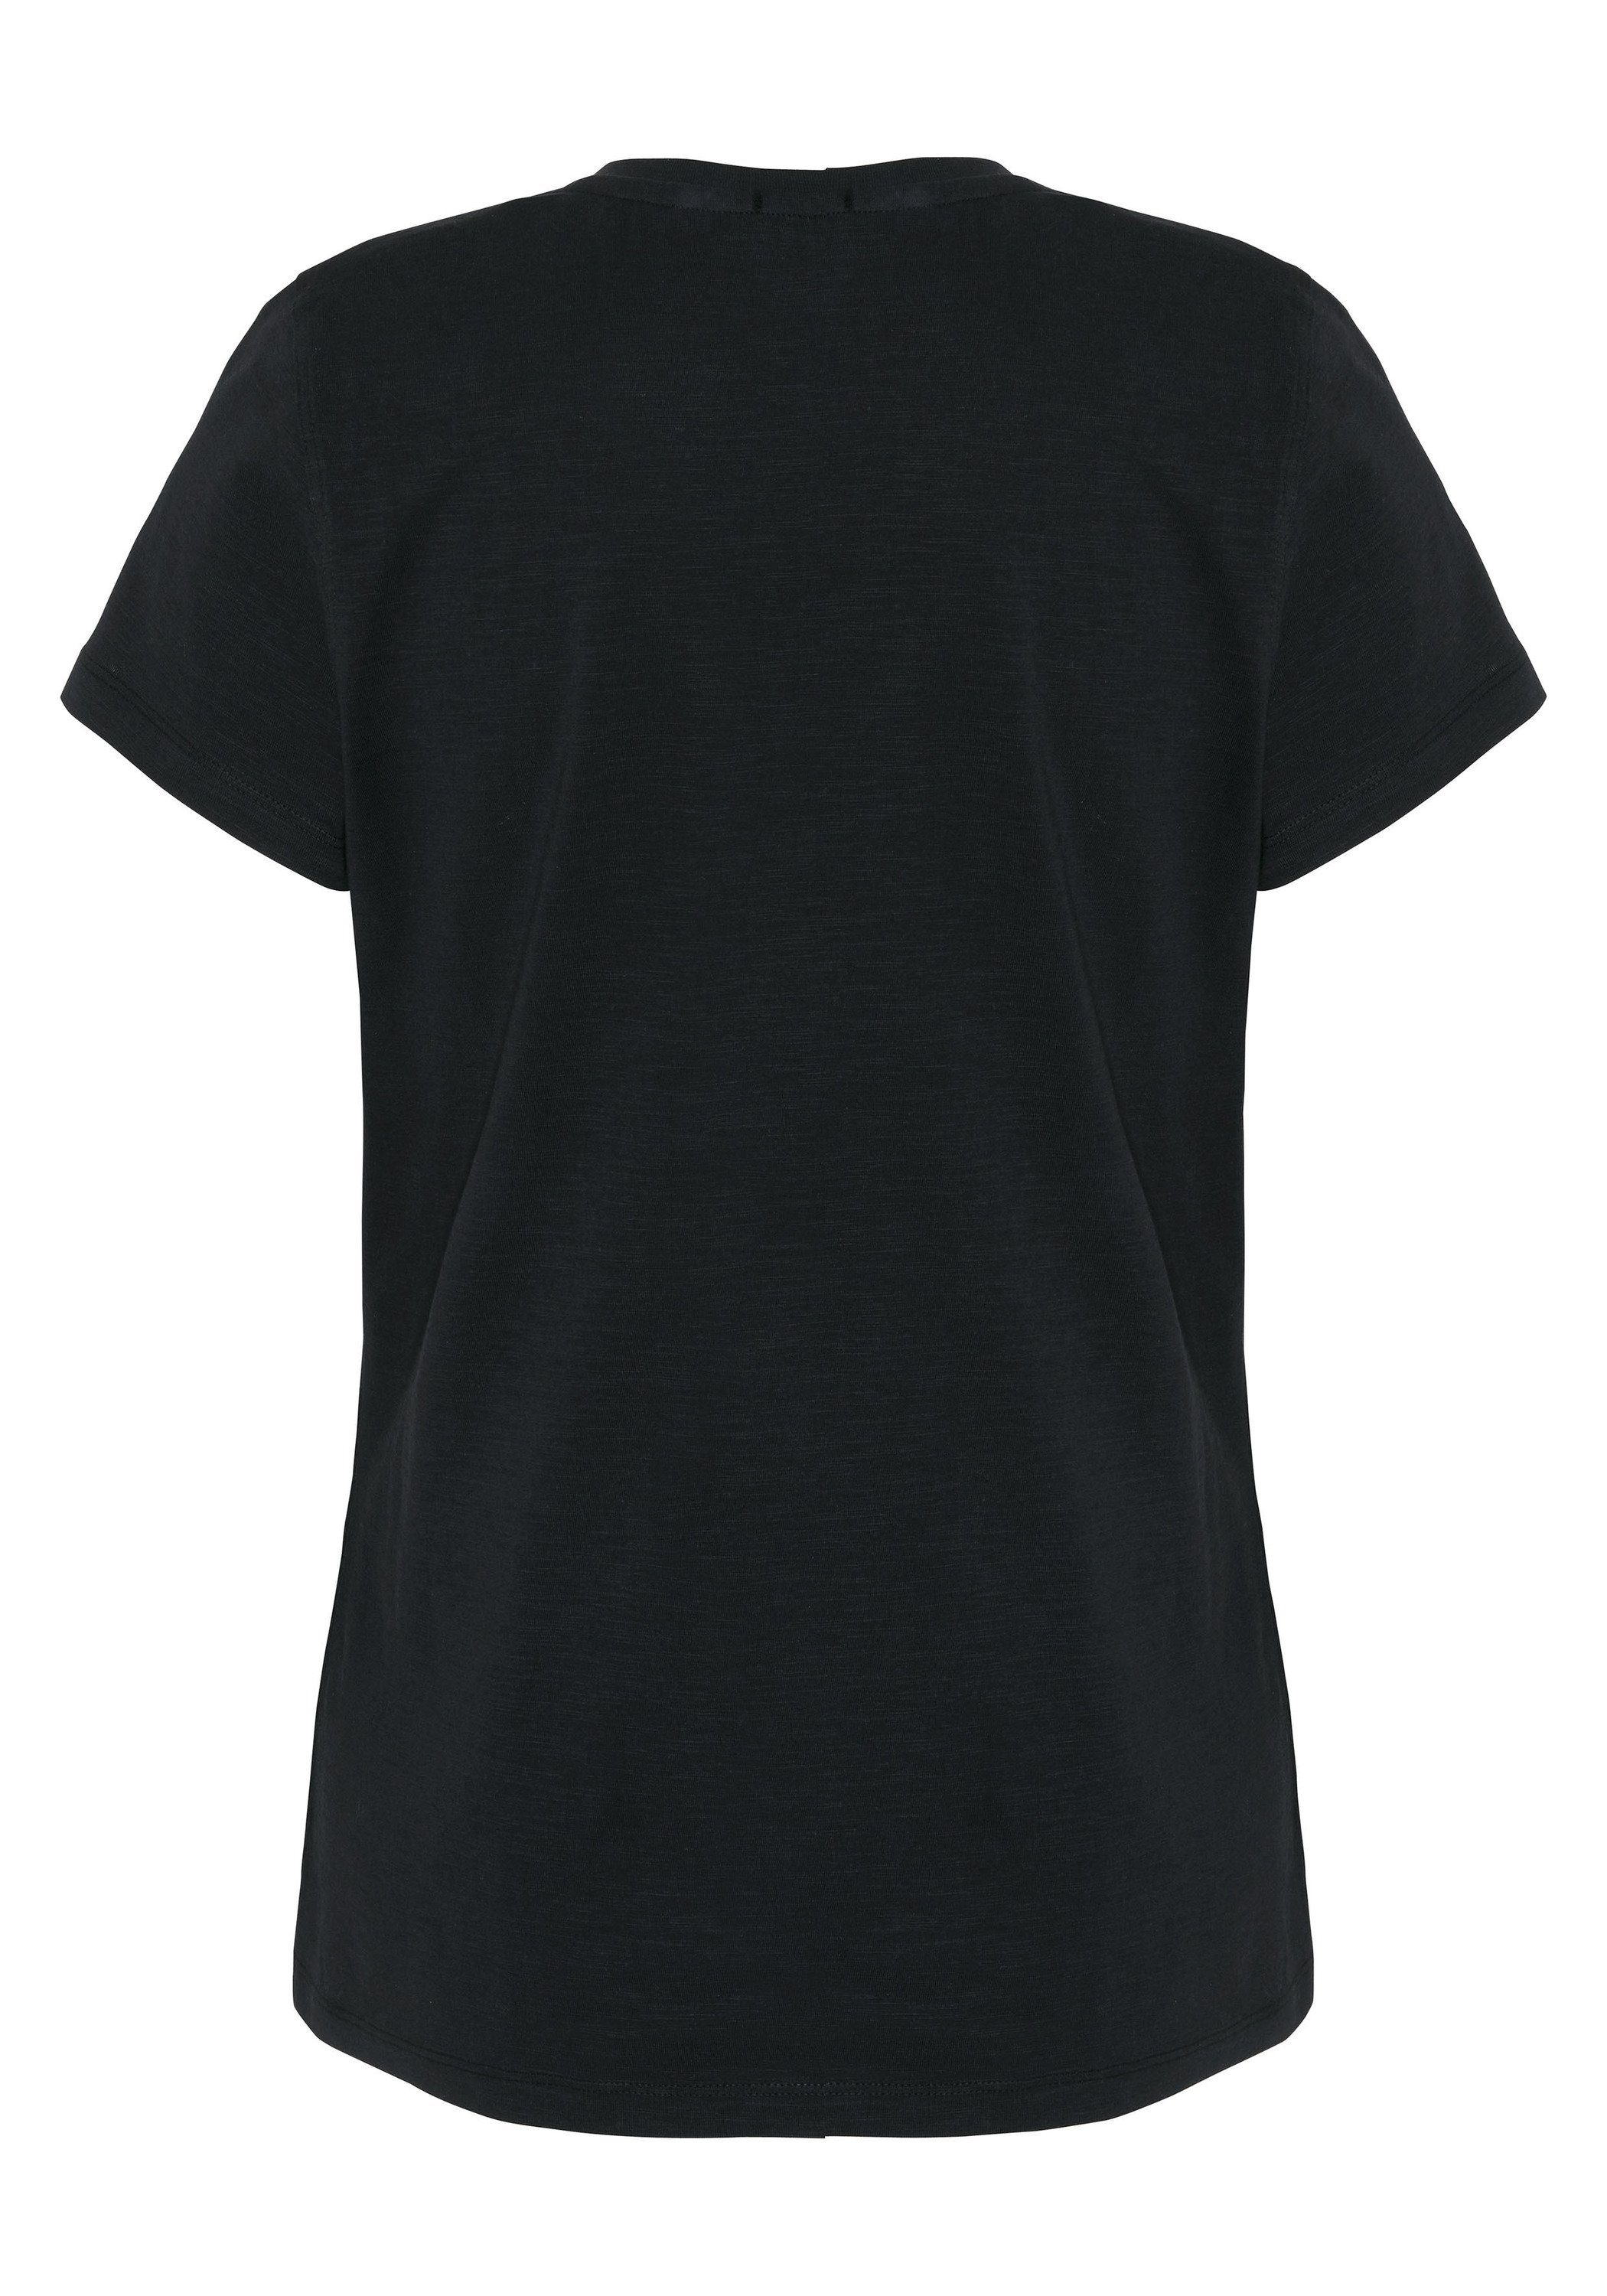 Jumper-Frontprint 19-3911 Chiemsee Black Beauty 1 Print-Shirt mit T-Shirt